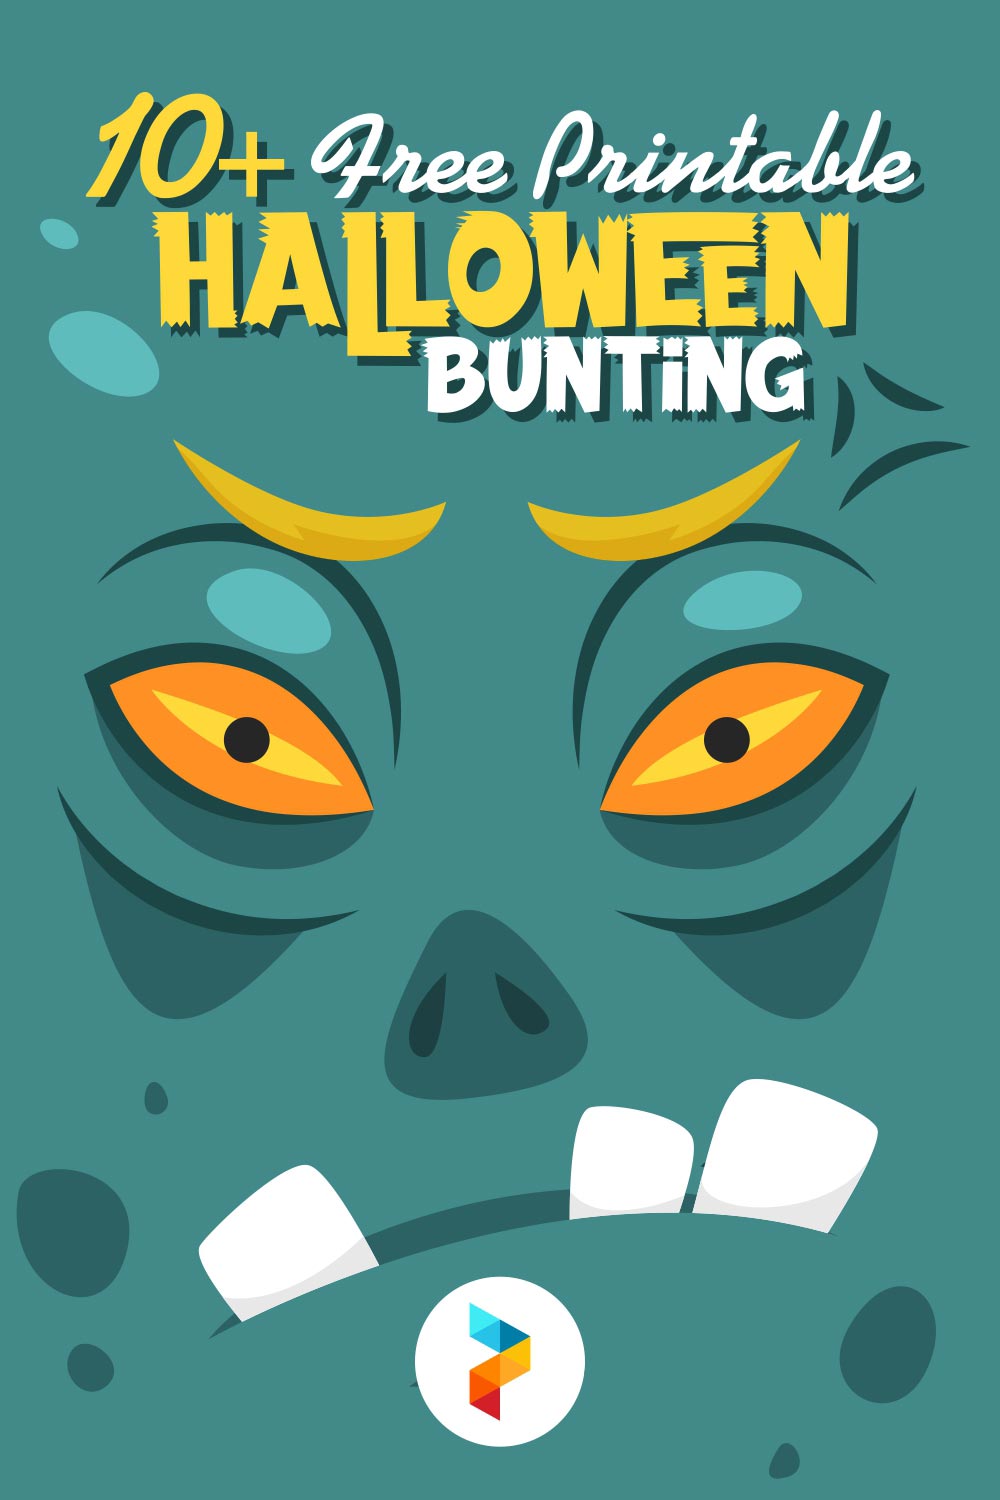 Printable Halloween Bunting